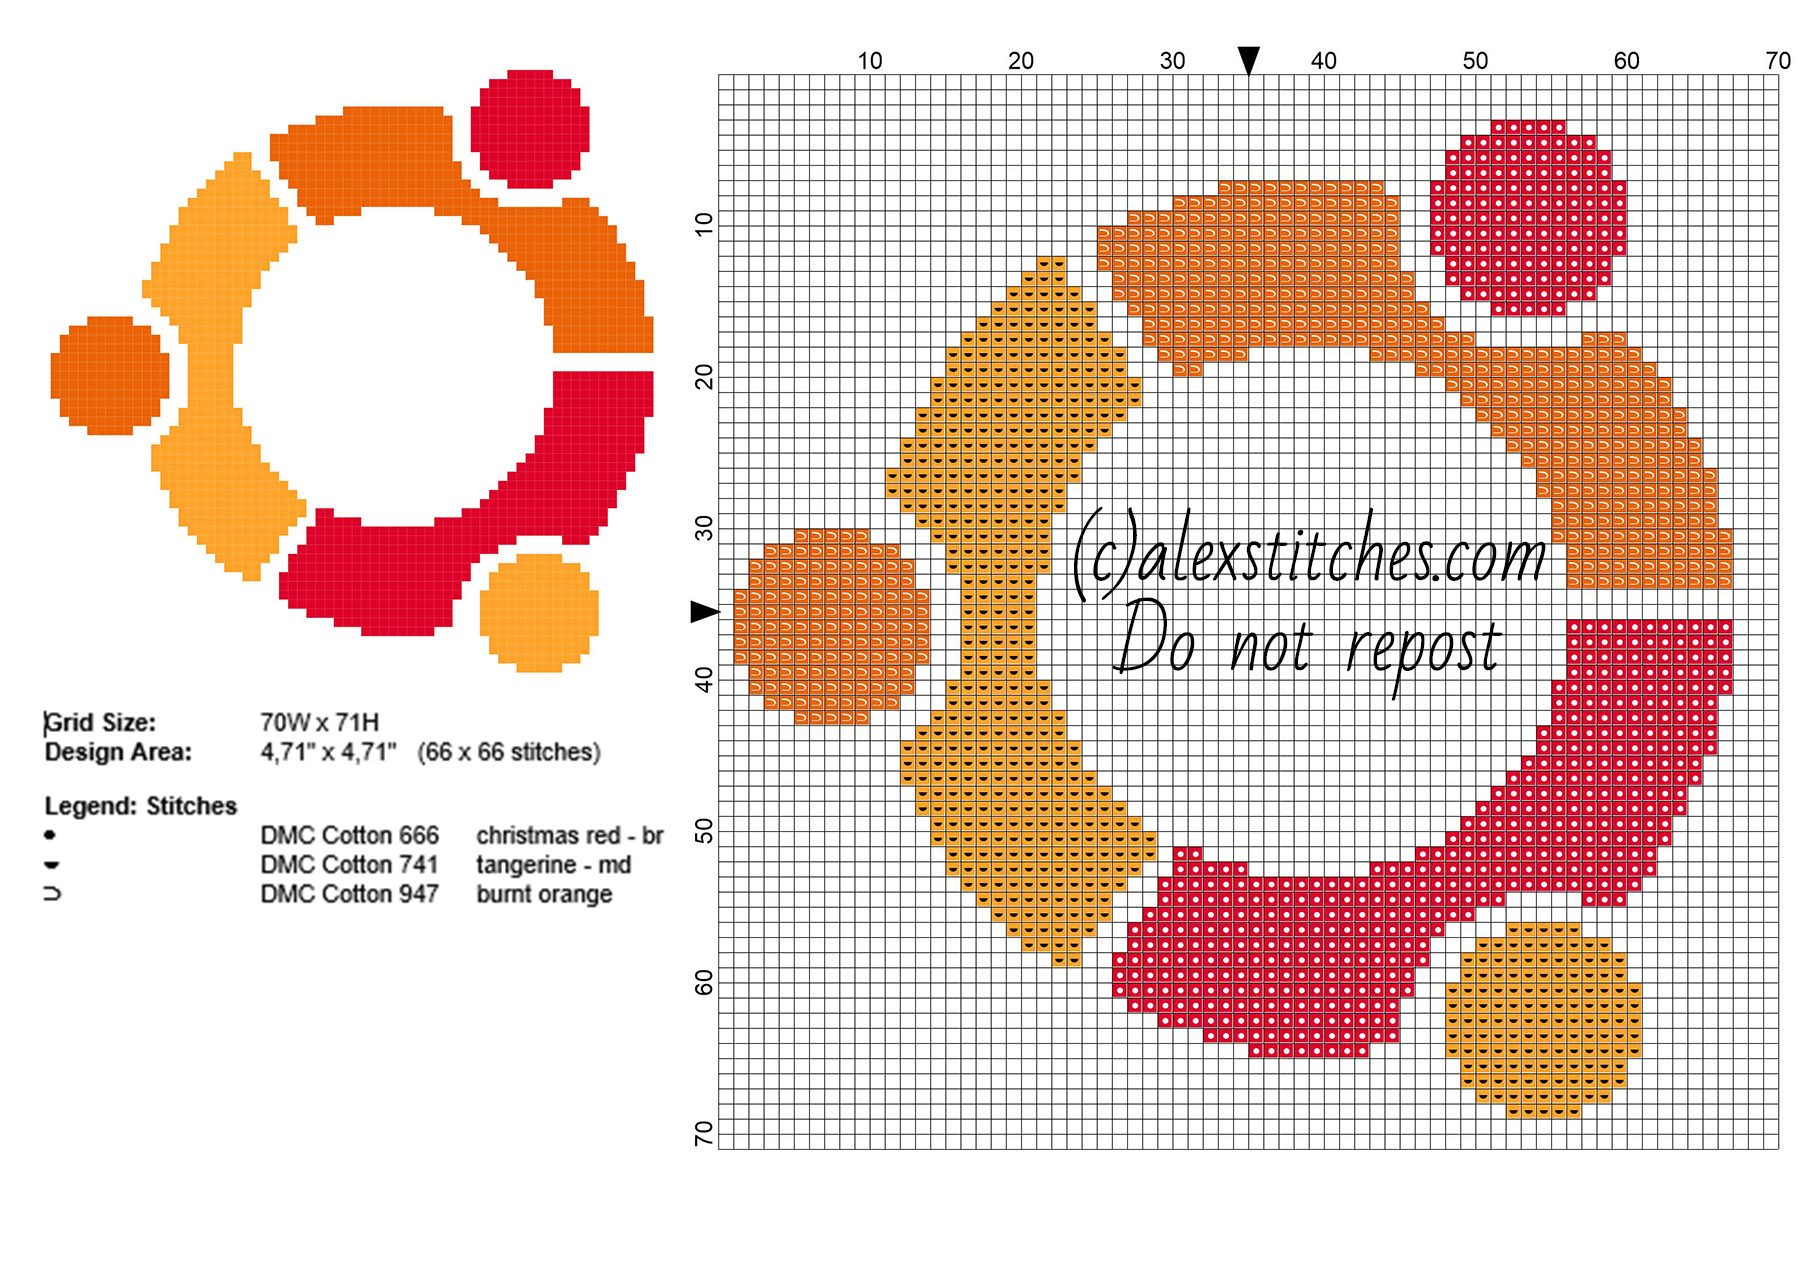 Ubuntu Linux logo free small cross stitch pattern 66 x 66 3 DMC threads